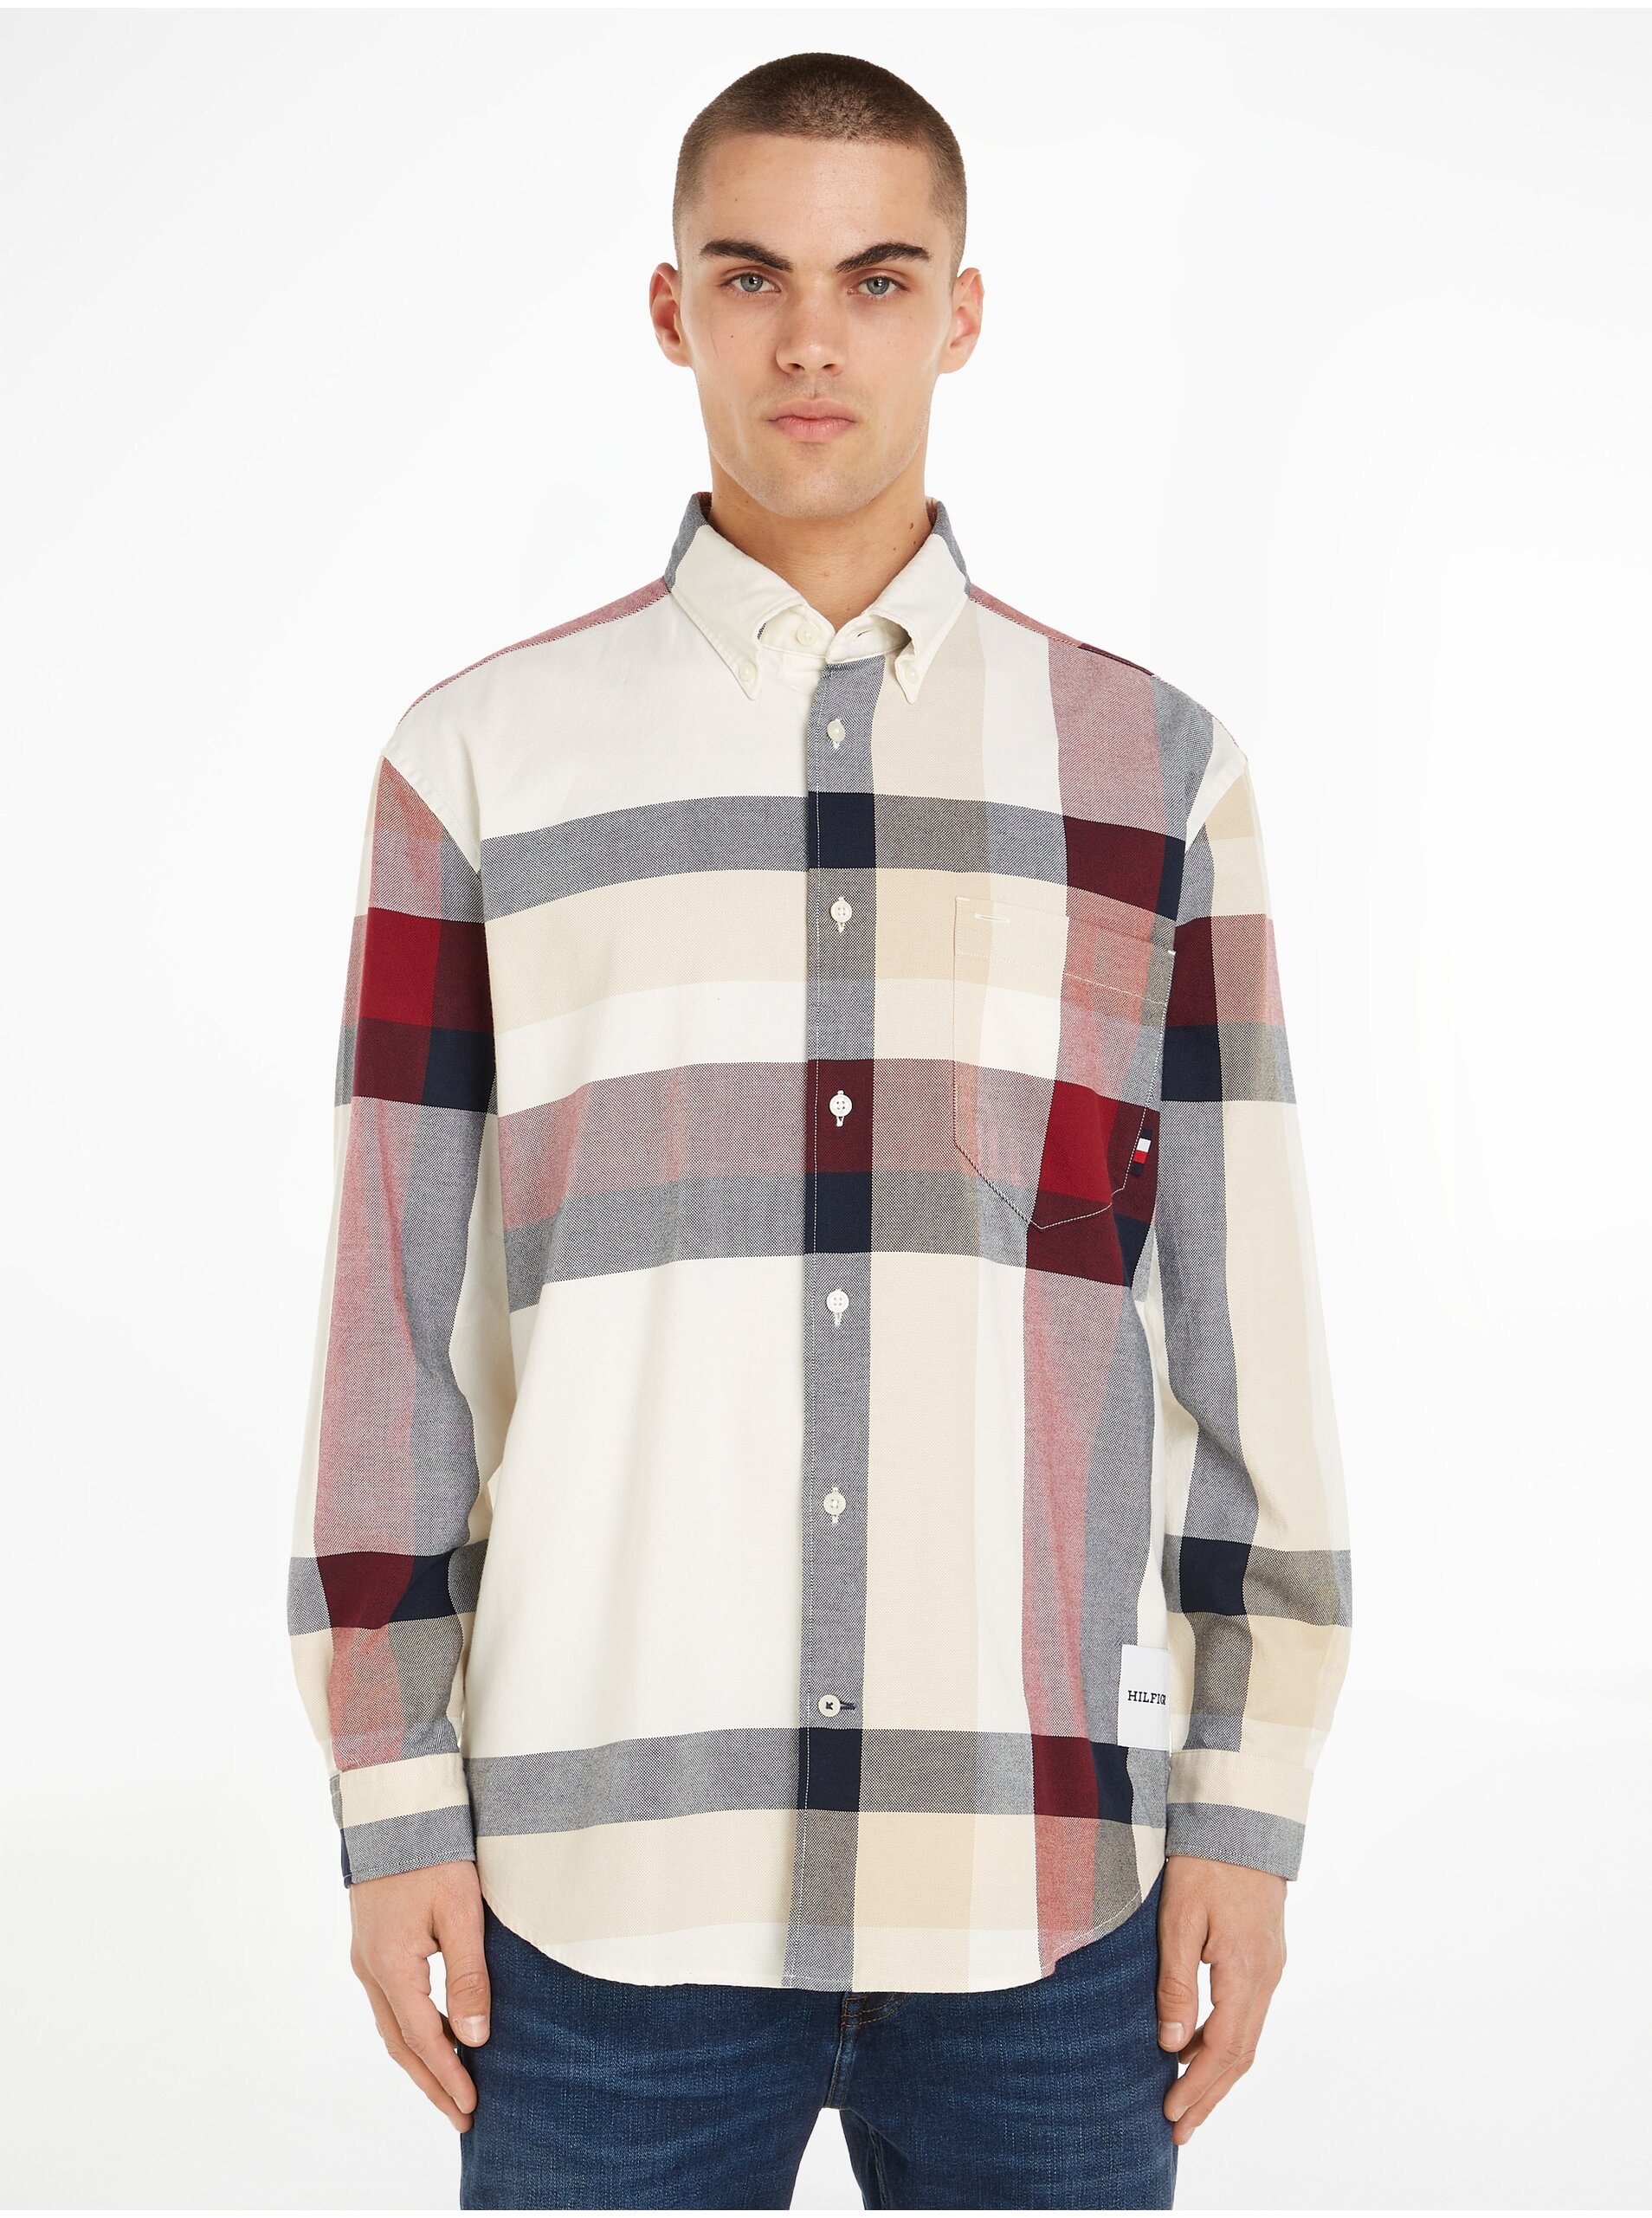 Red-white Mens Checkered Shirt Tommy Hilfiger - Men